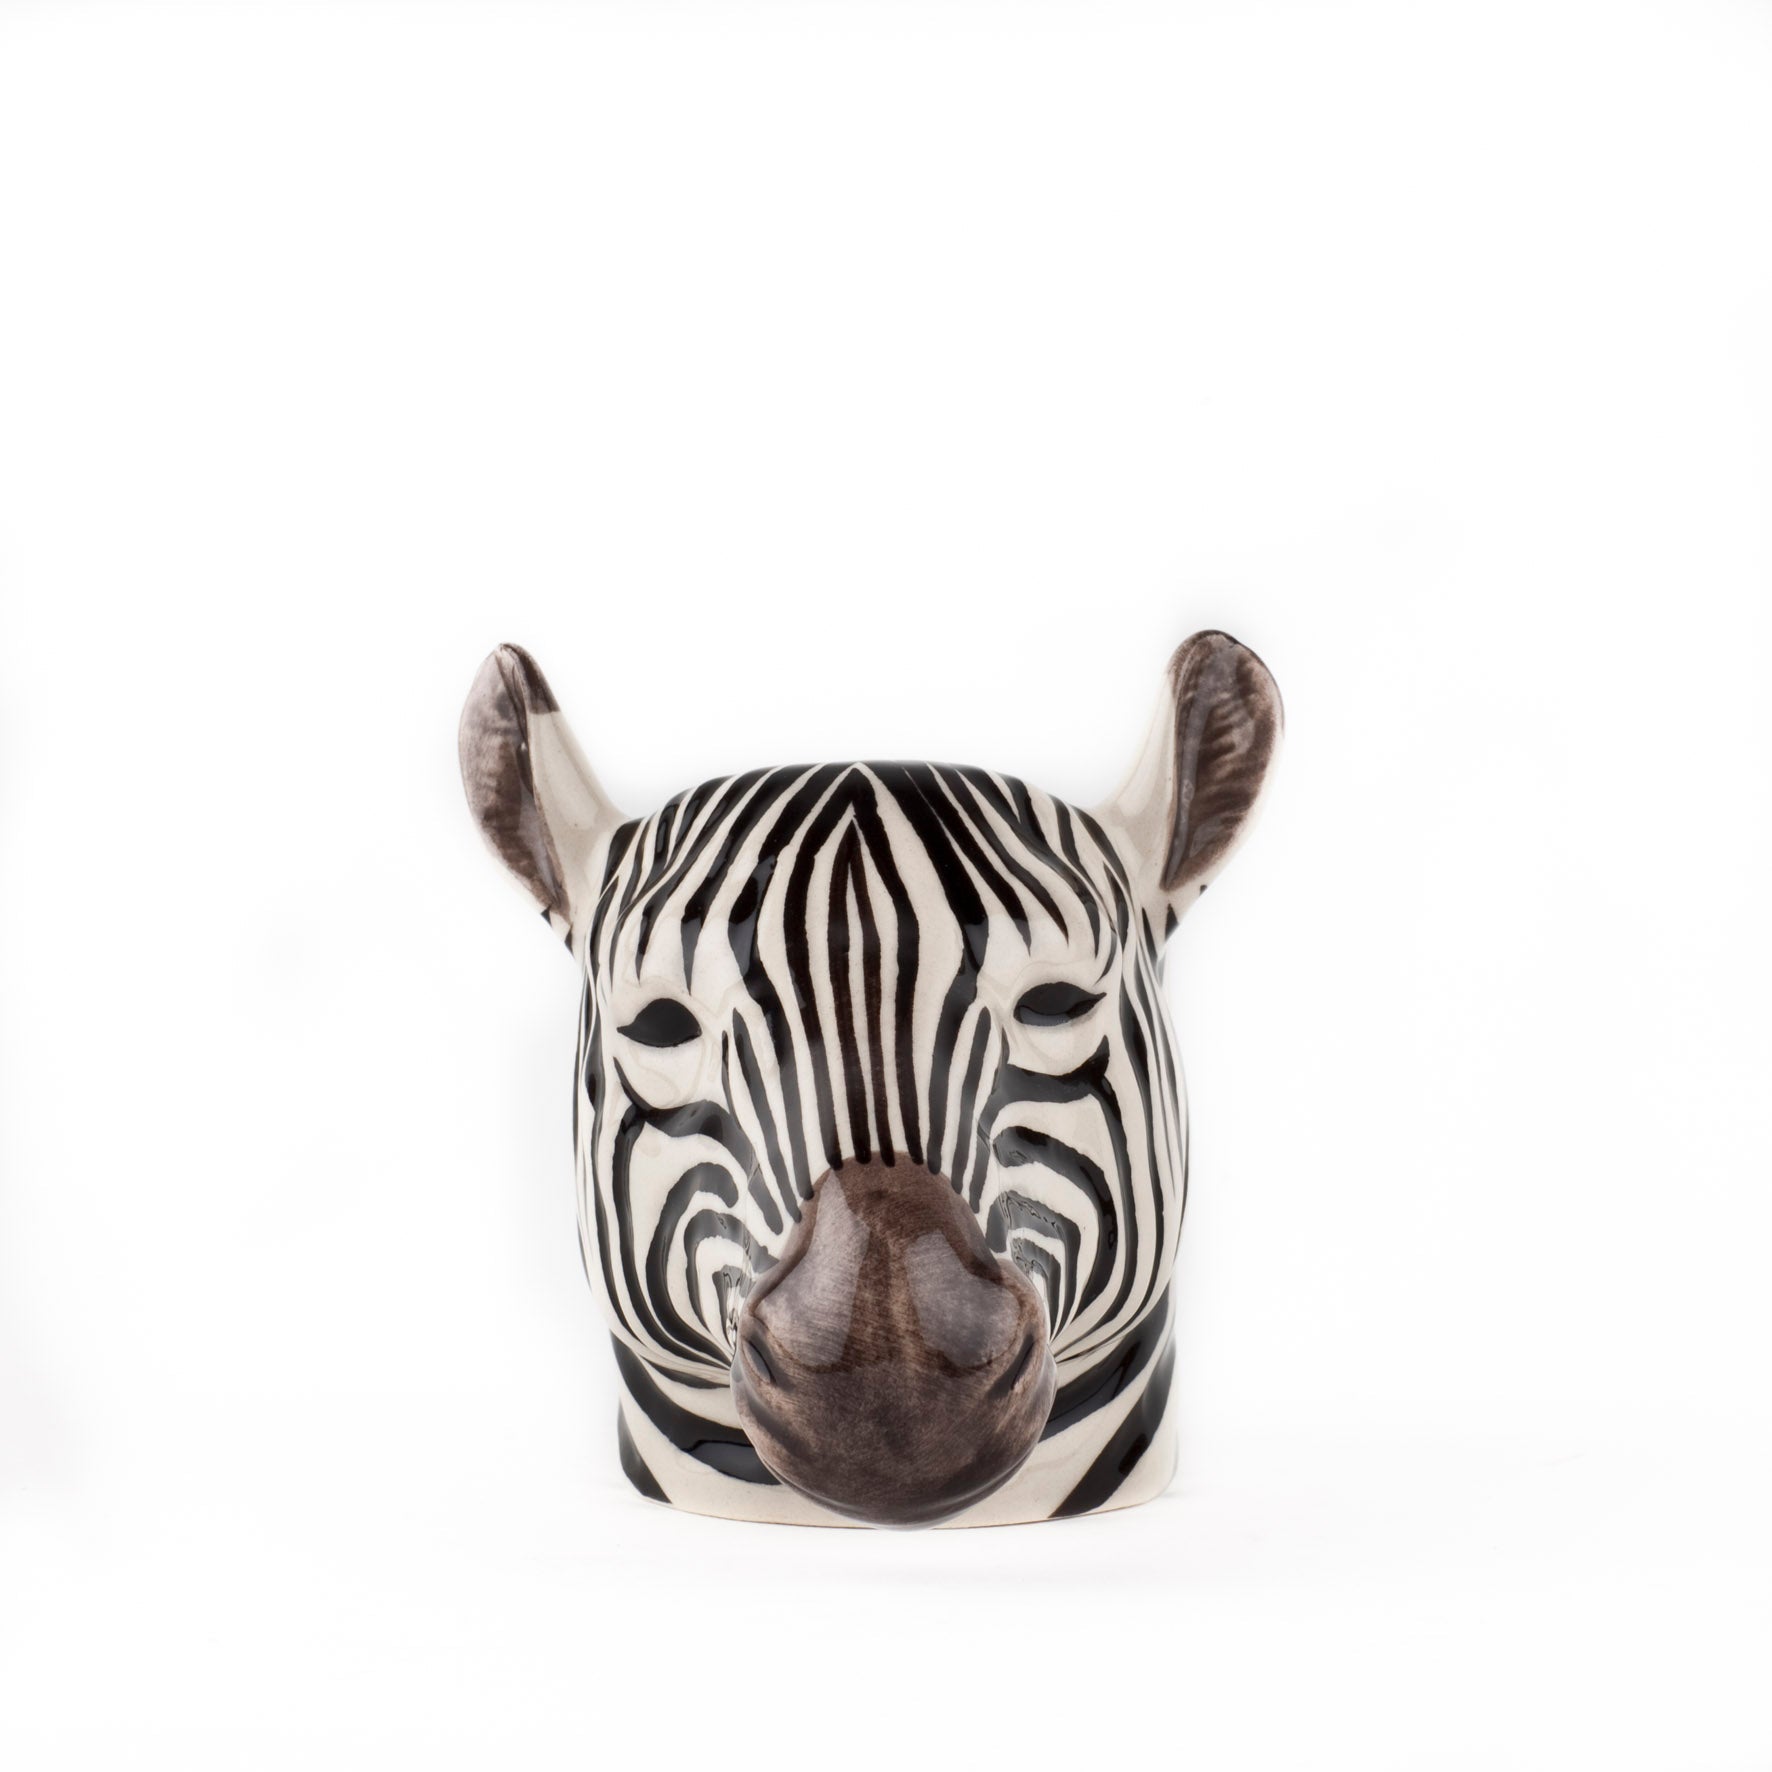 Zebra face egg cup